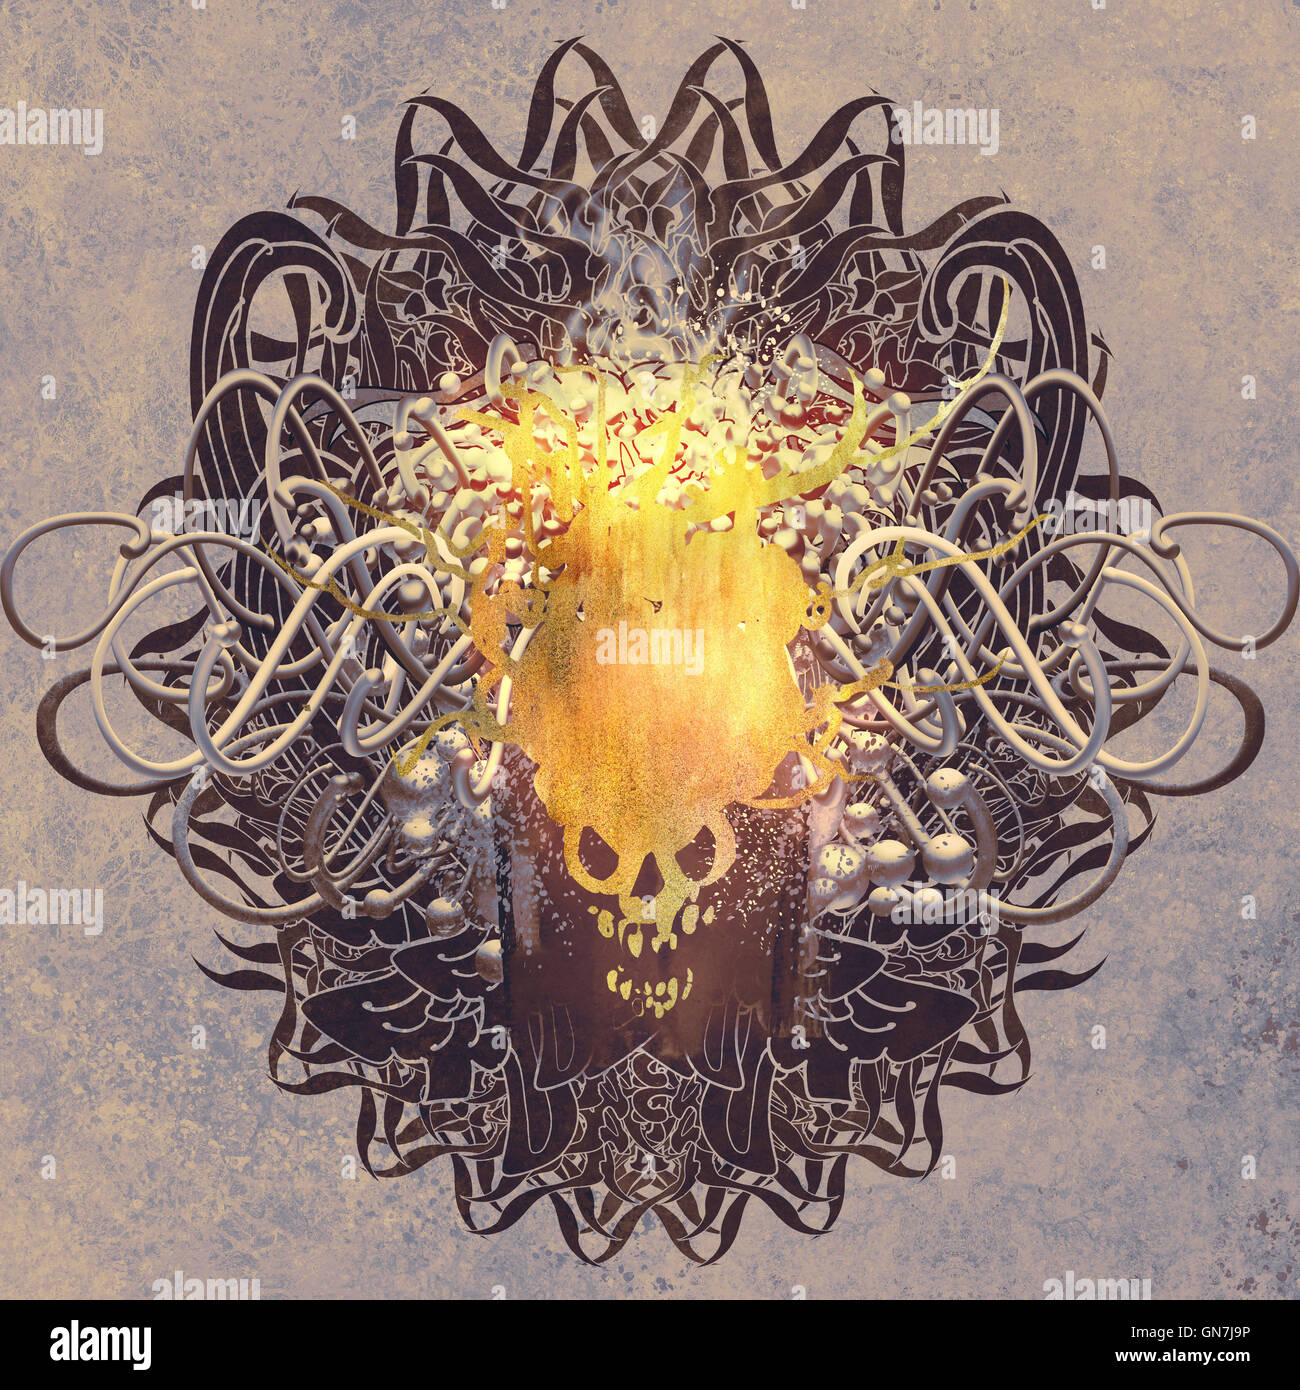 Fire calavera en fondo gráfico con textura grunge, ilustración arte Foto de stock